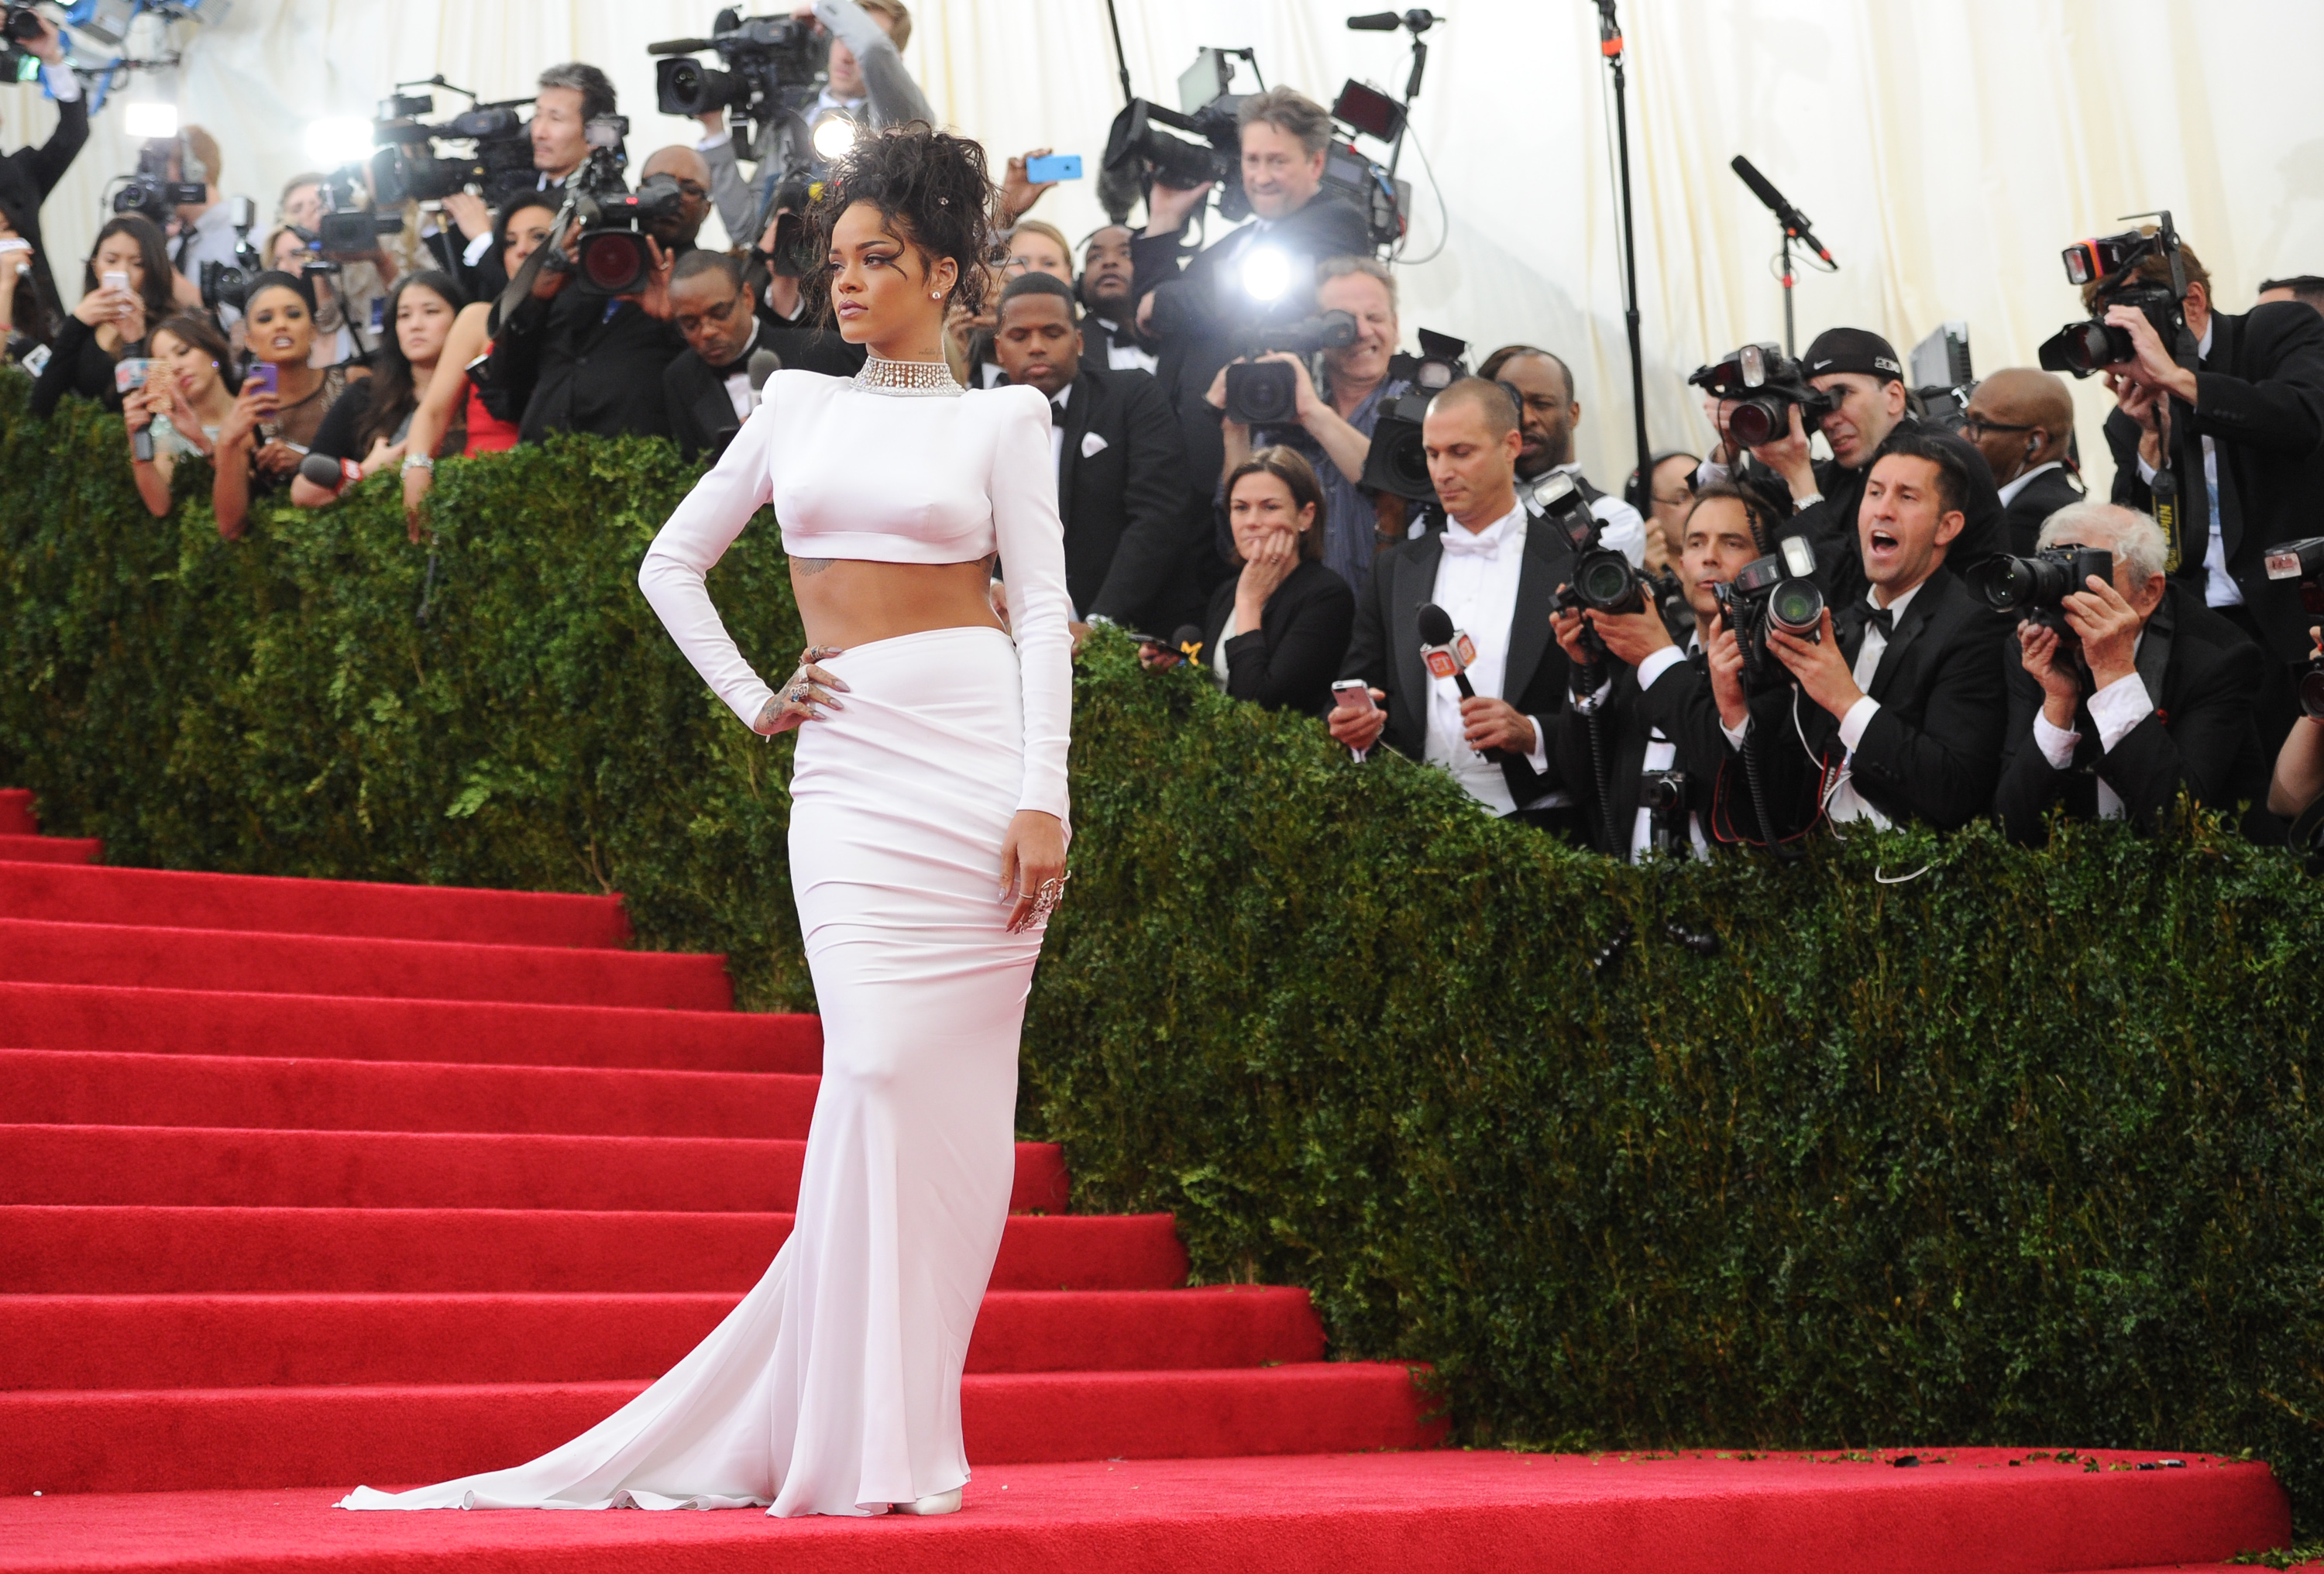 AP PHOTOS: A look at Rihanna’s fashion and style